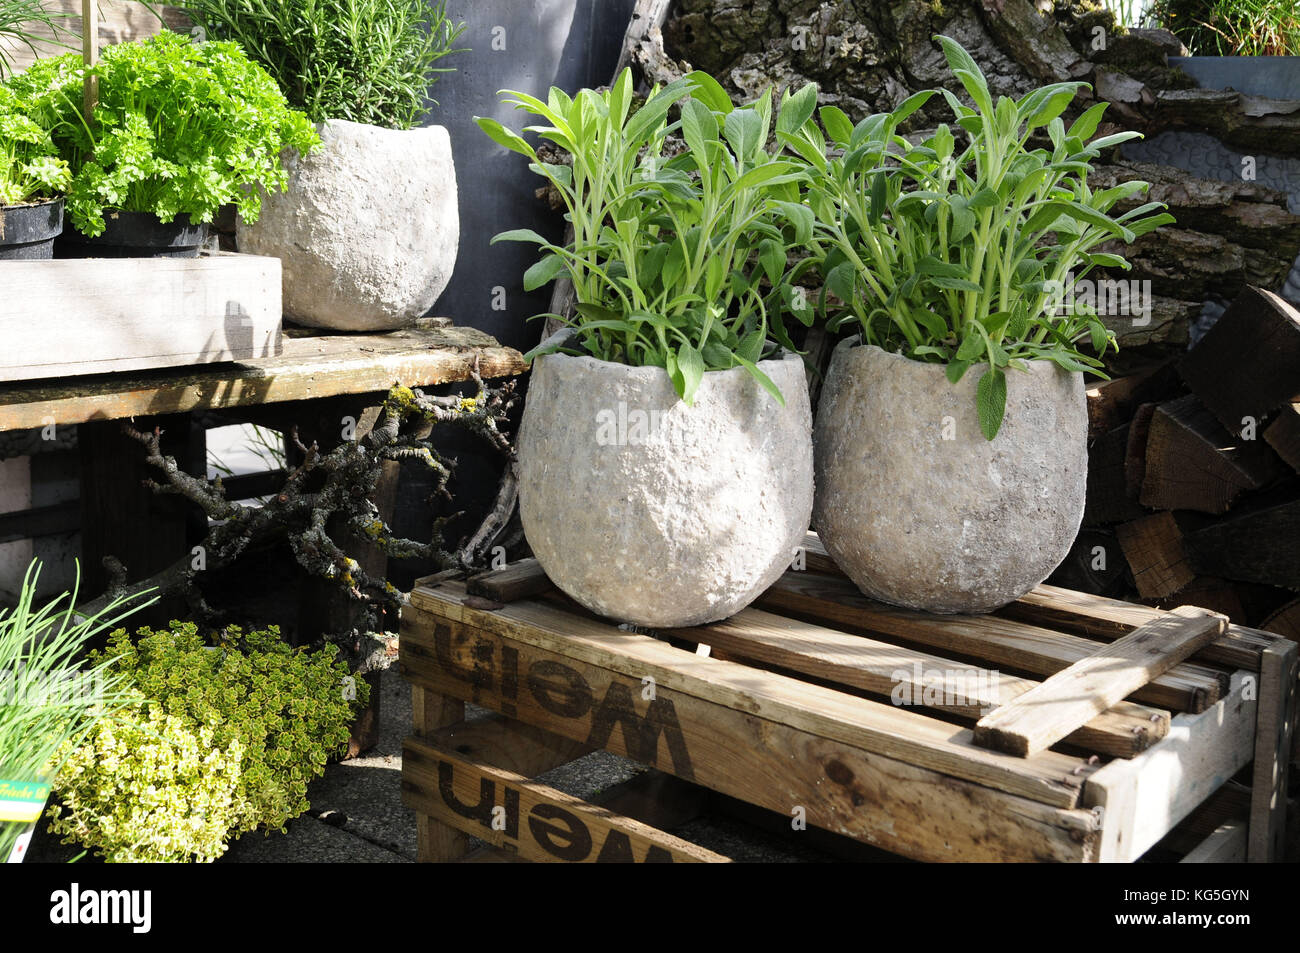 Herbs in pots, sage, Salvia, close-up Stock Photo